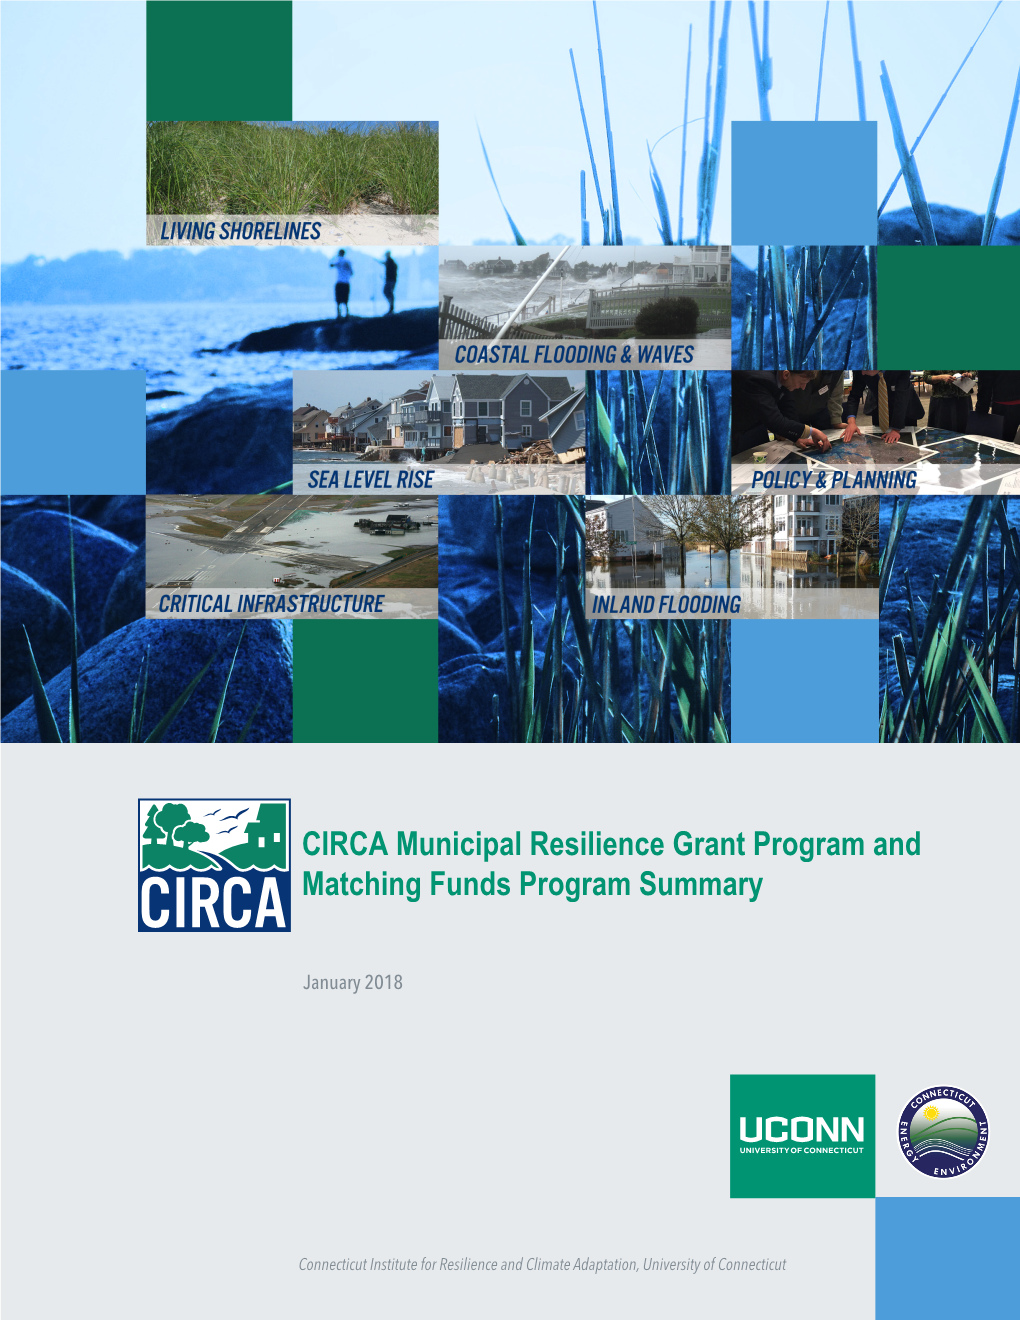 CIRCA Municipal Resilience Grant Program and Matching Funds Program Summary